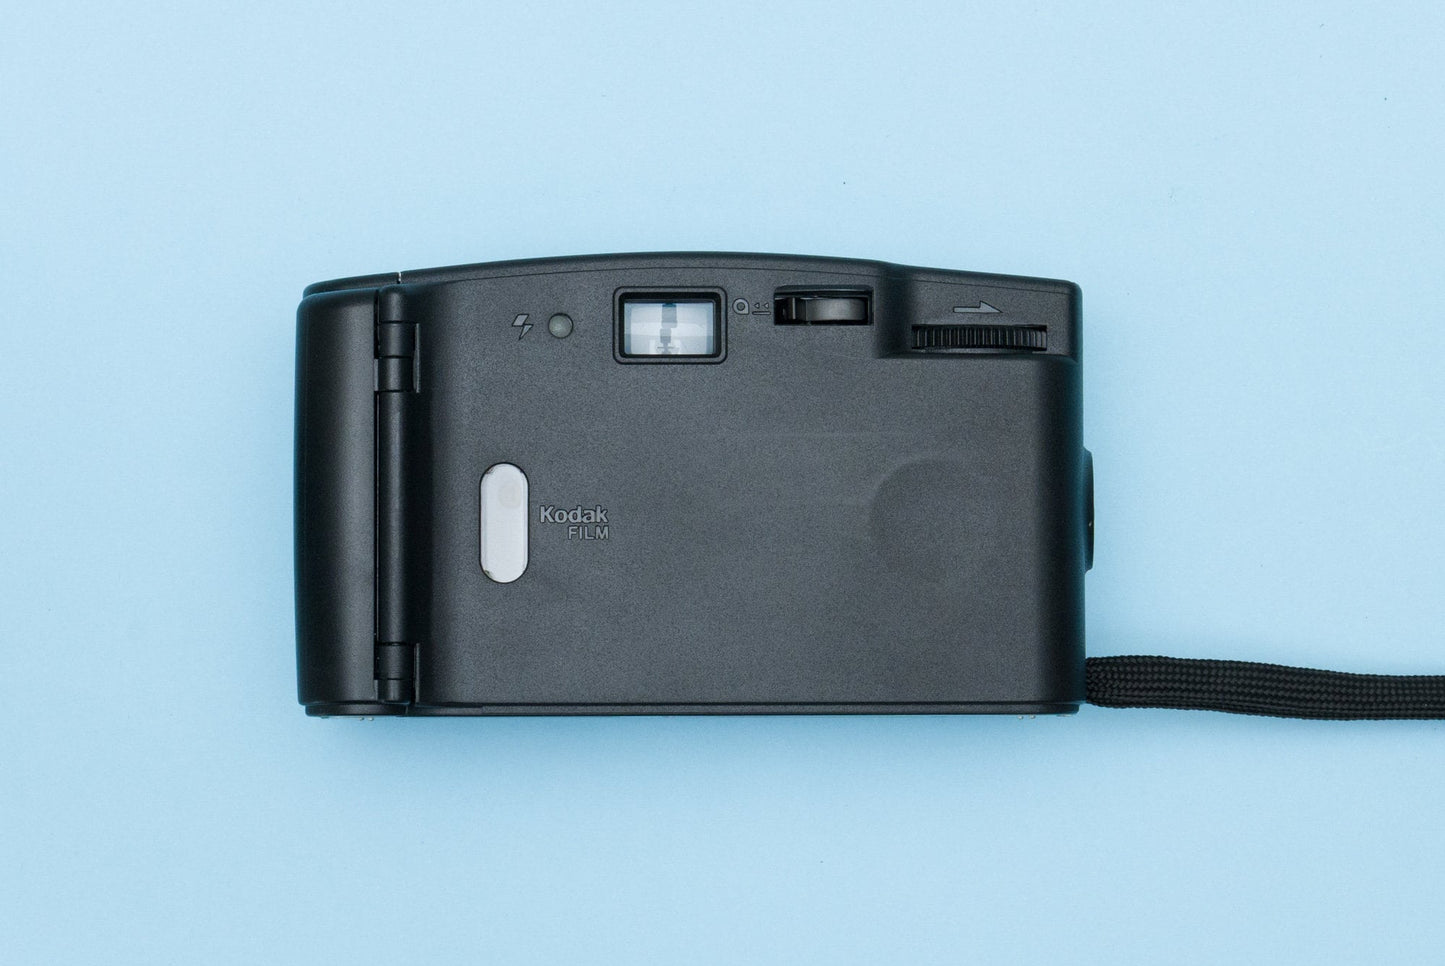 Kodak EC 100 Compact 35mm Point and Shoot Film Camera